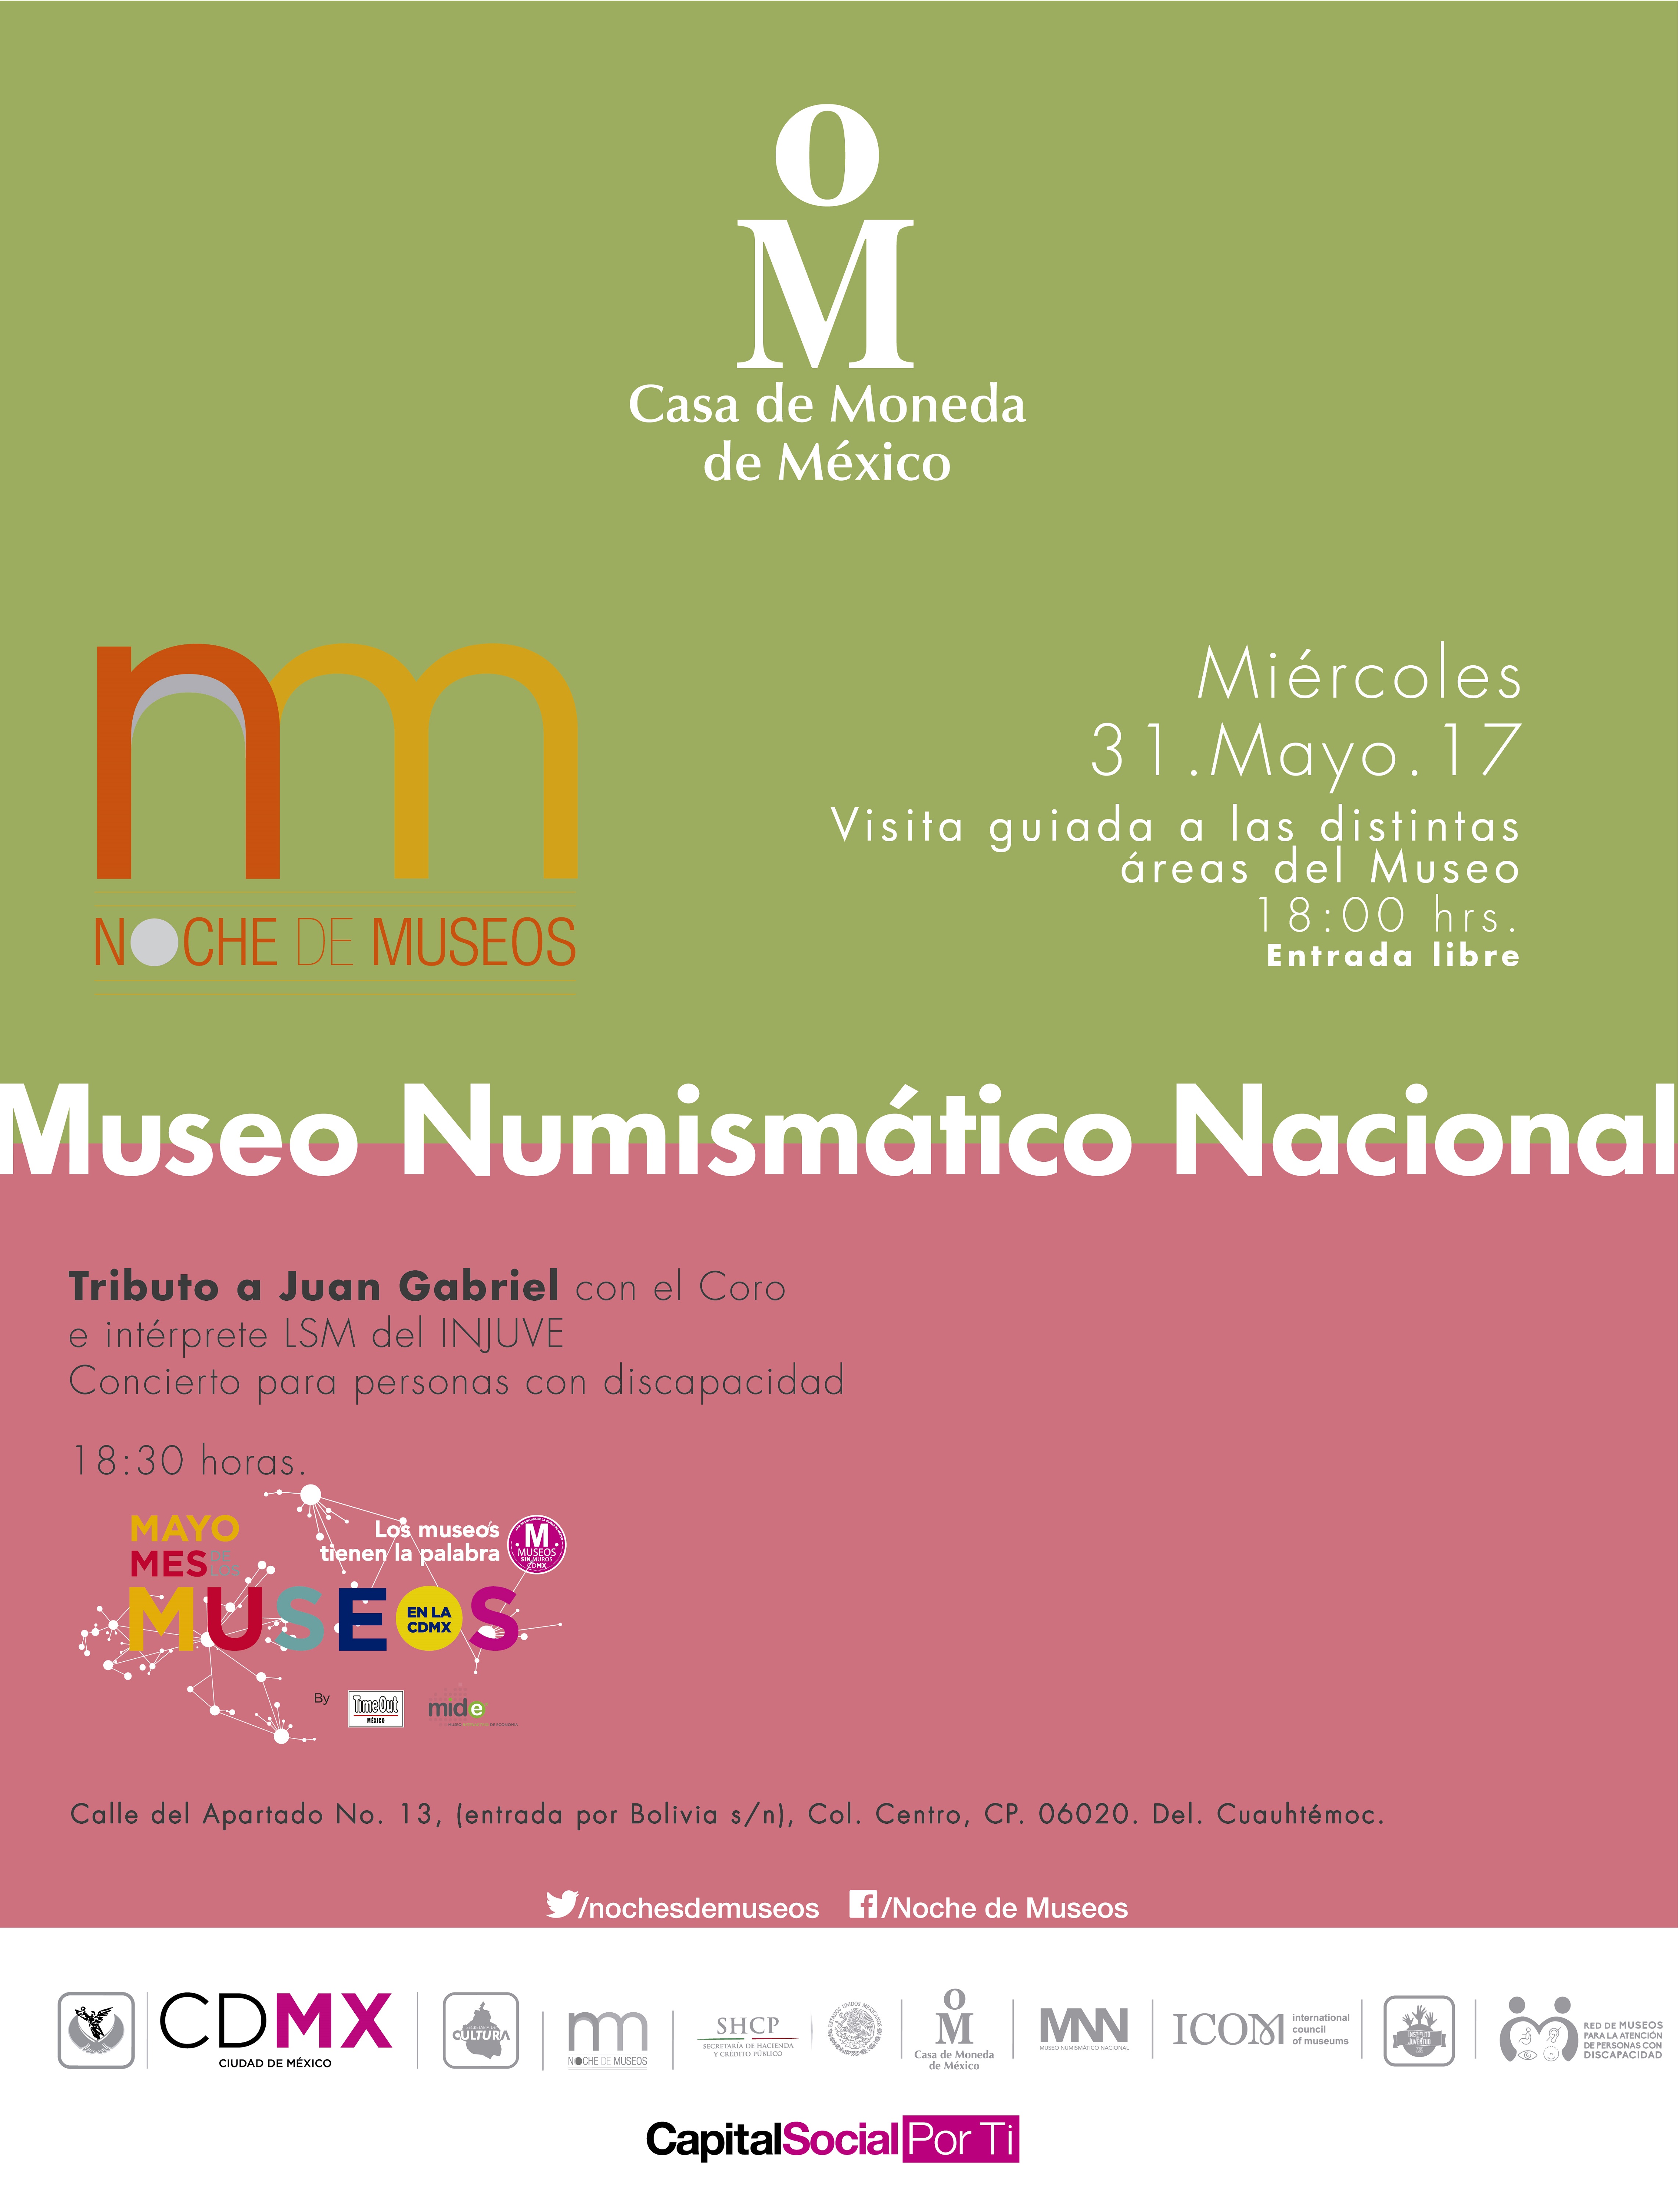 /cms/uploads/image/file/285147/Noche_de_Museos_mayo_2017.jpg